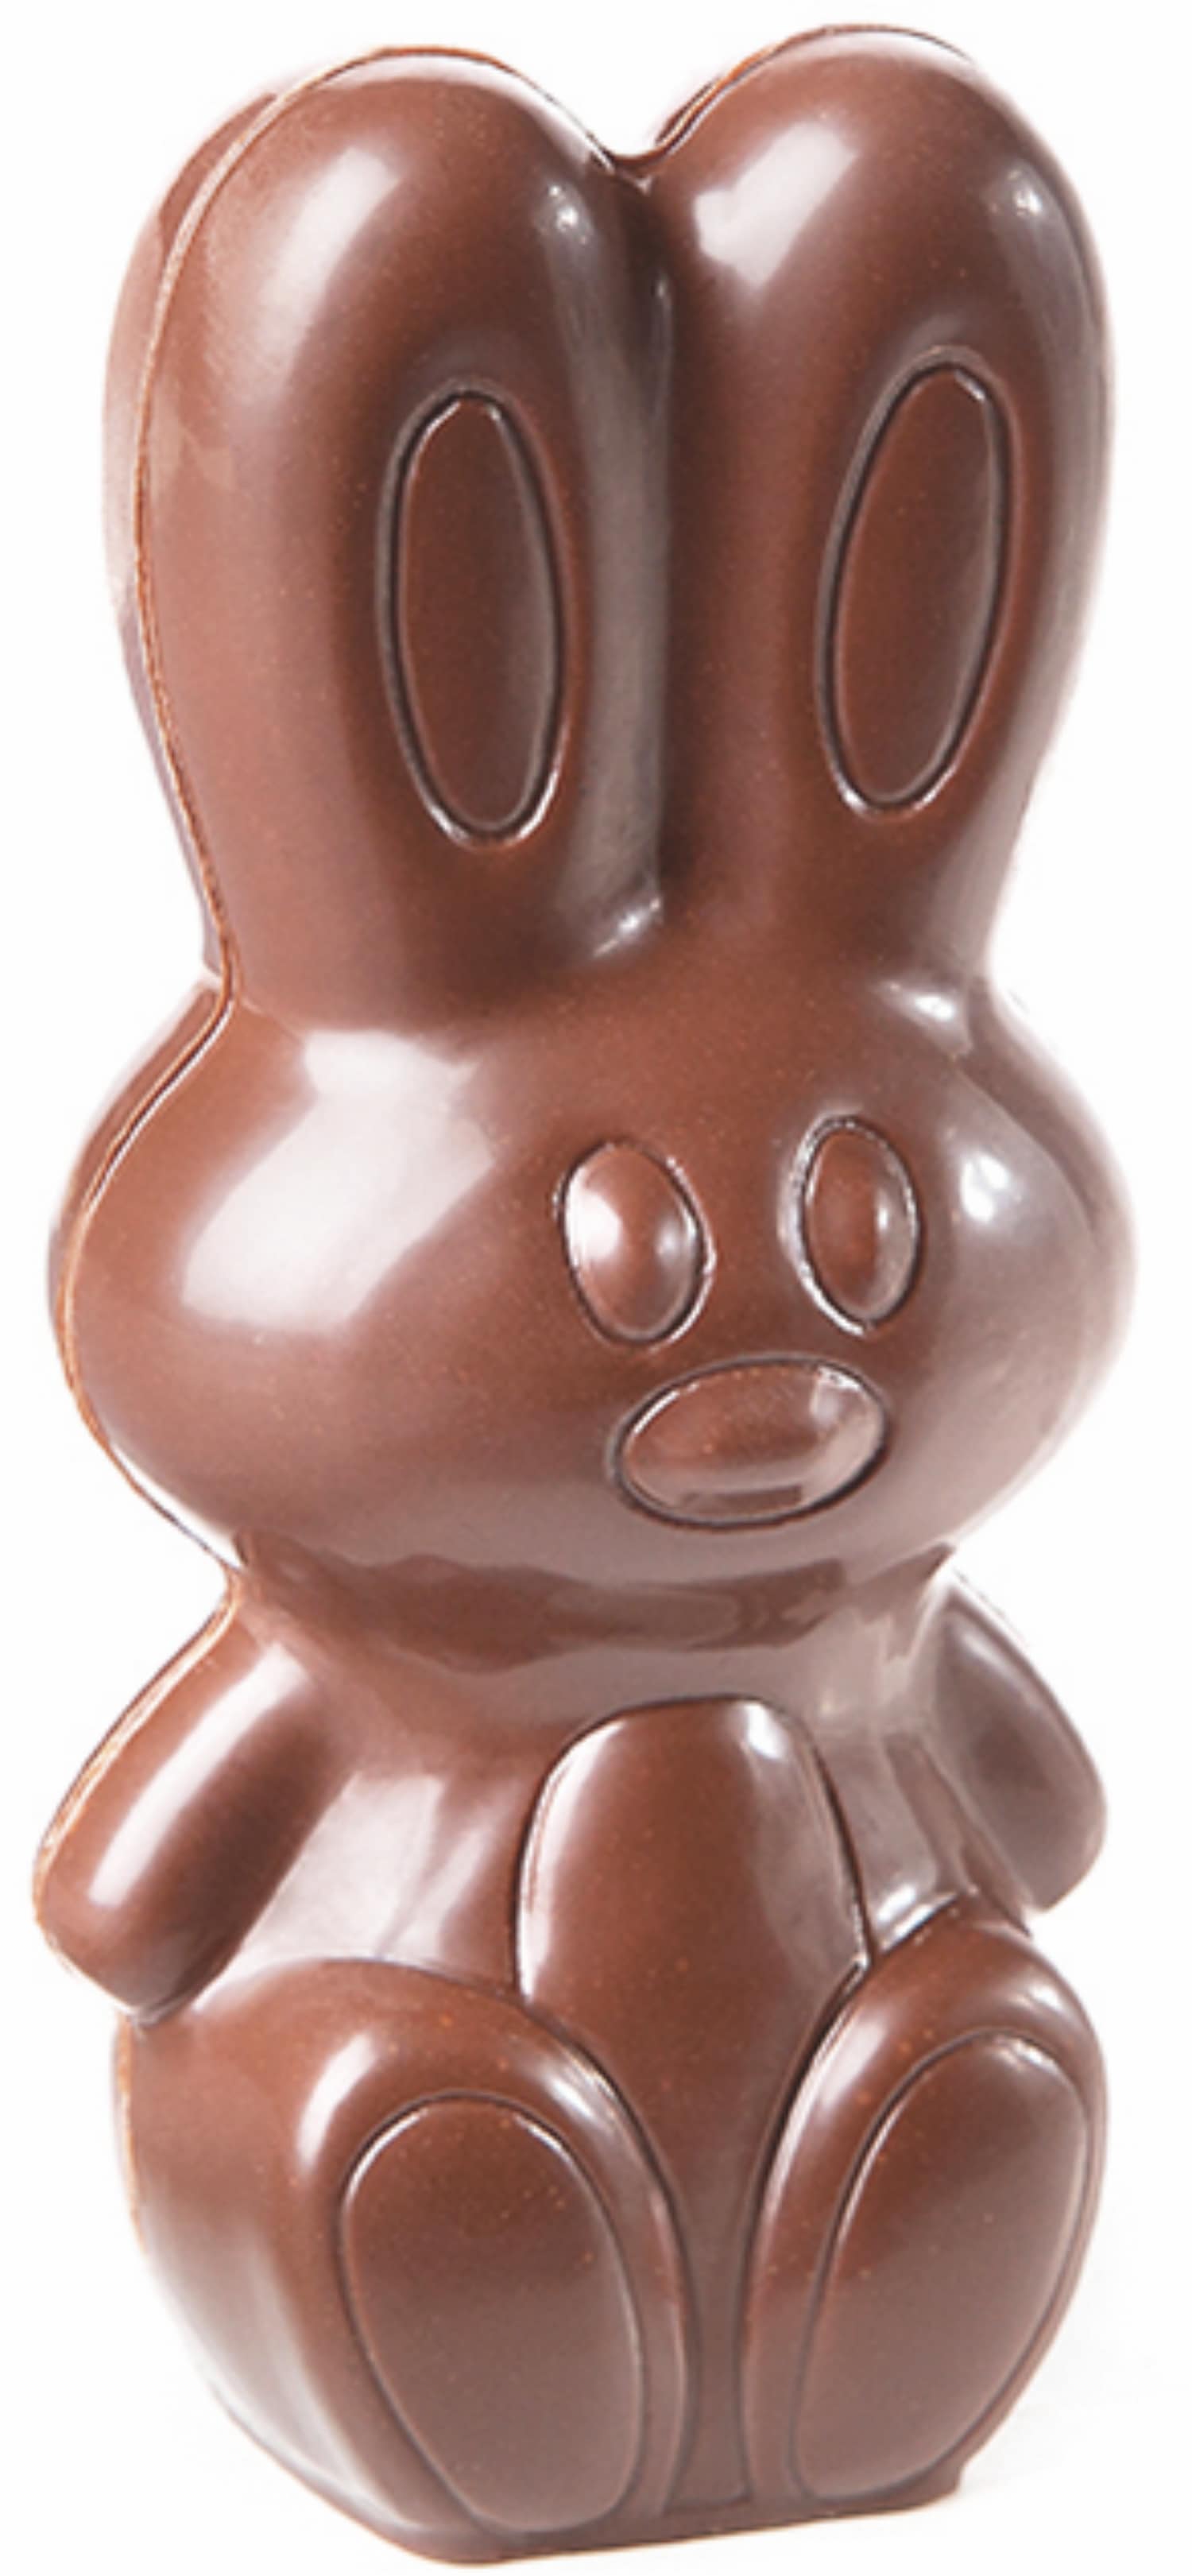 Schokoladenform "Hase" 421739